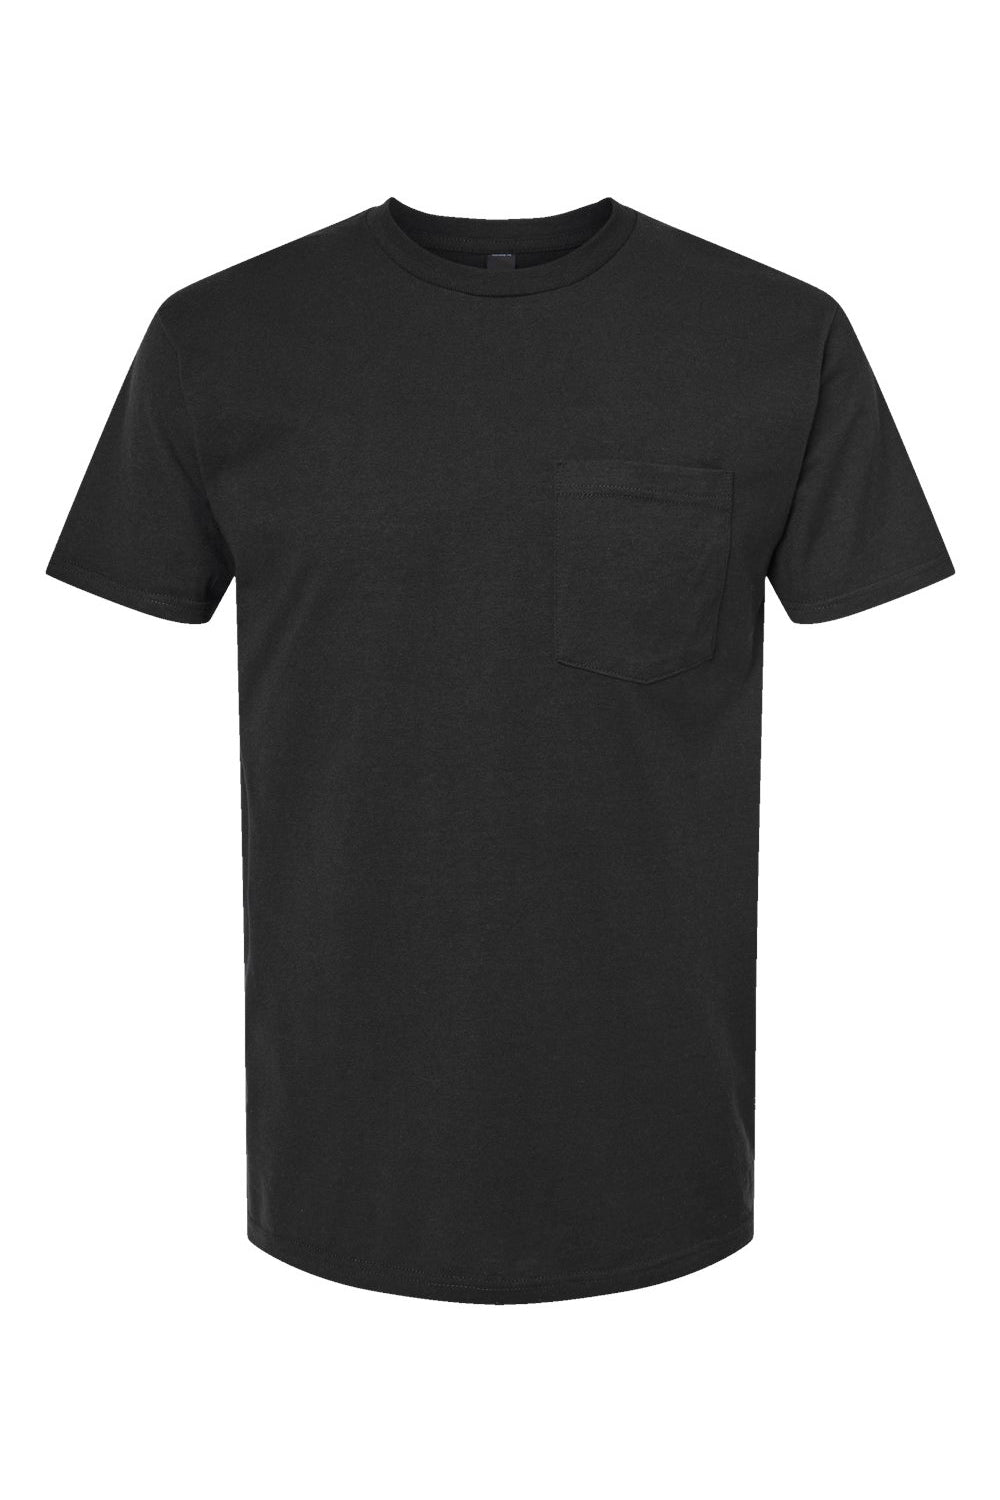 Tultex 293 Mens Jersey Short Sleeve Crewneck T-Shirt w/ Pocket Black Flat Front